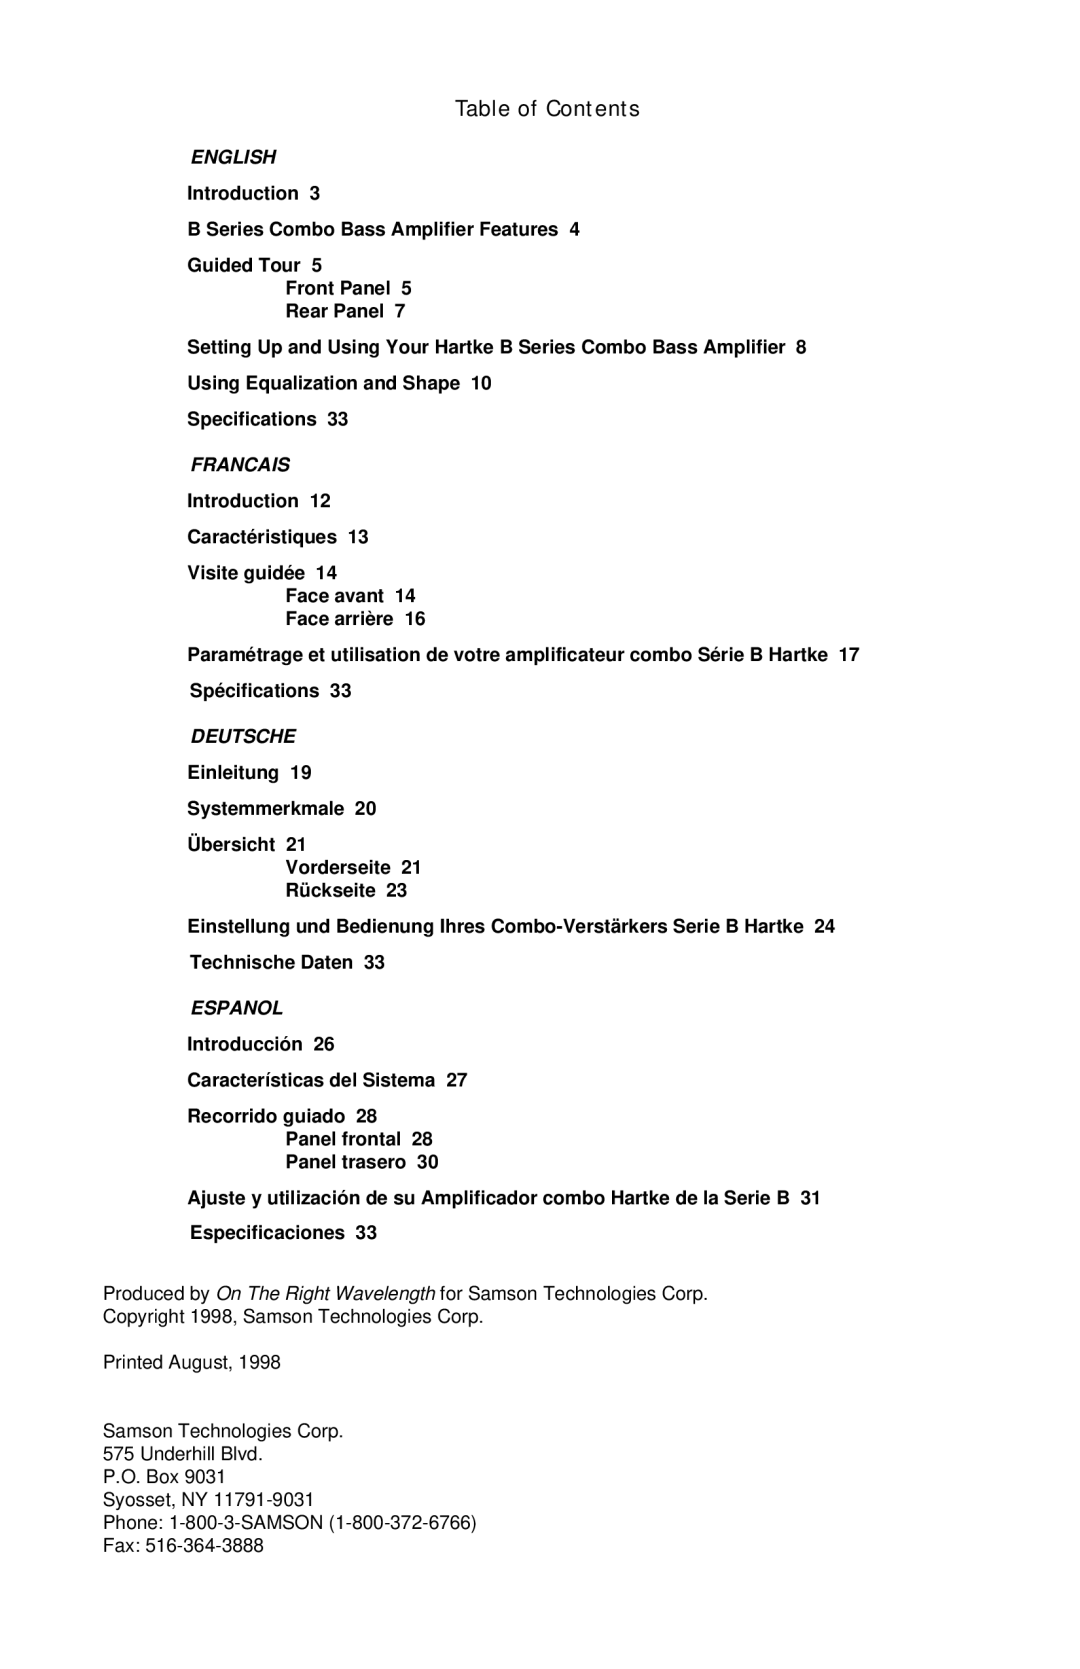 Samson B90 owner manual Table of Contents, English, Francais, Deutsche, Espanol 